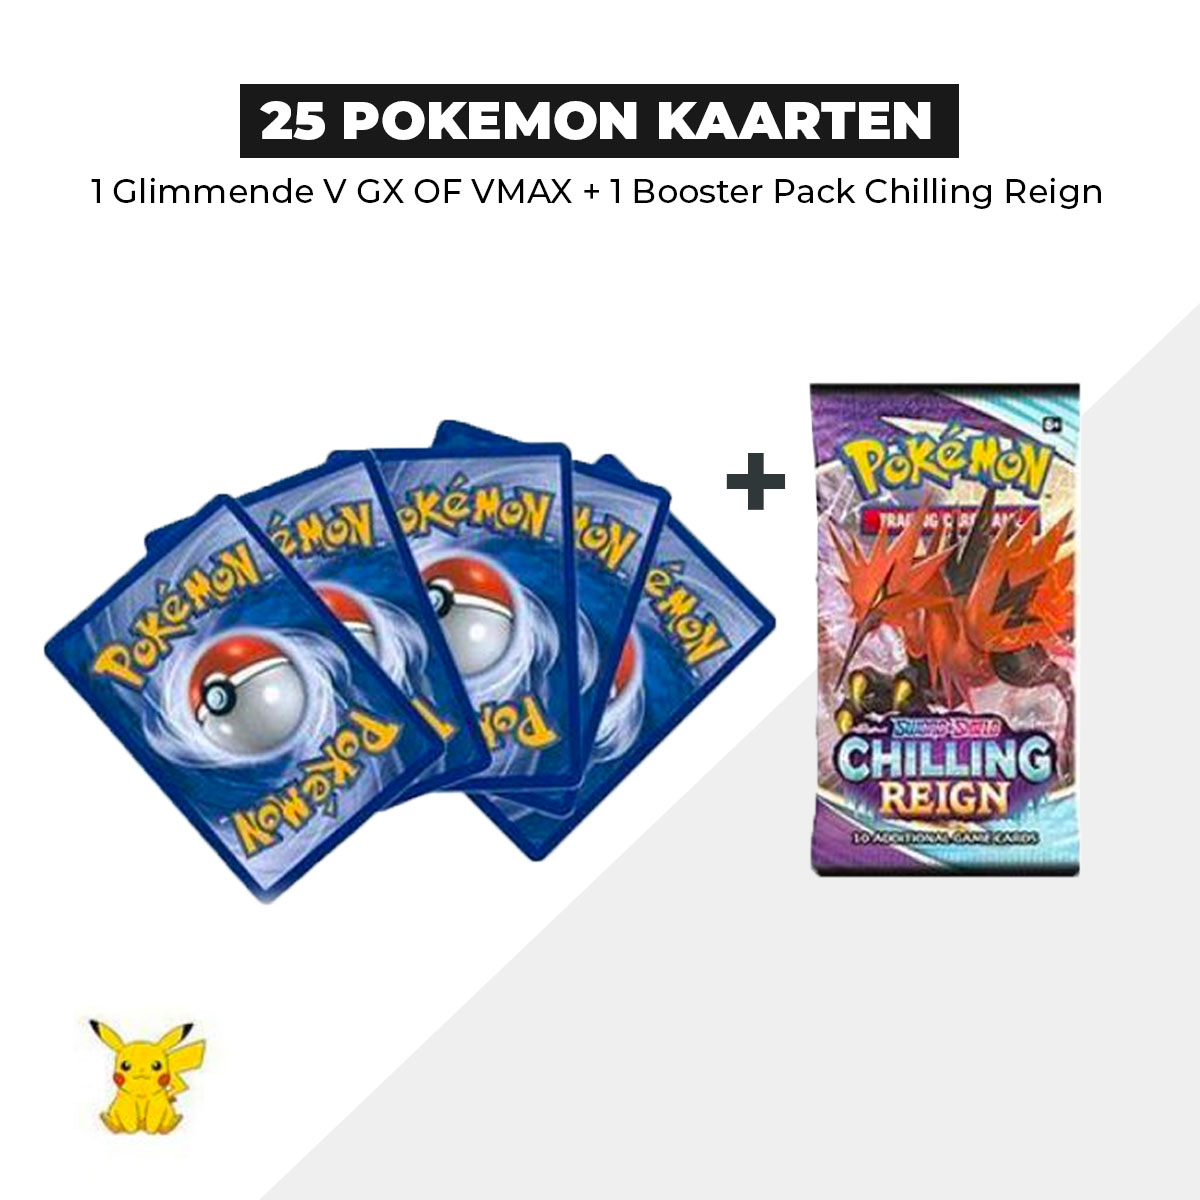 25 Pokémon Kaarten Bundel + 1 Chilling Reign Booster pack